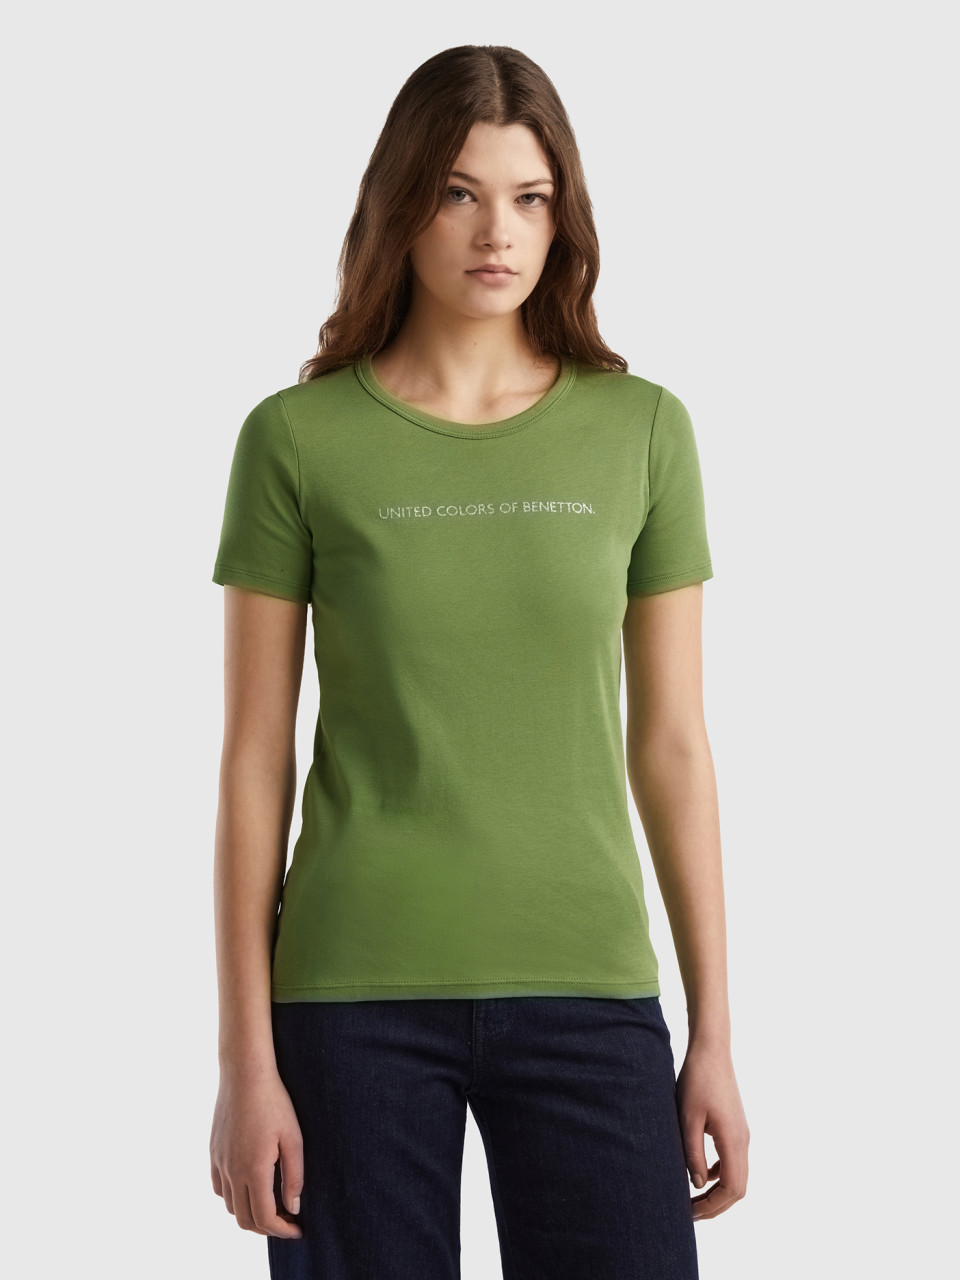 Benetton, T-shirt In 100% Cotton With Glitter Print Logo, Military Green, Women